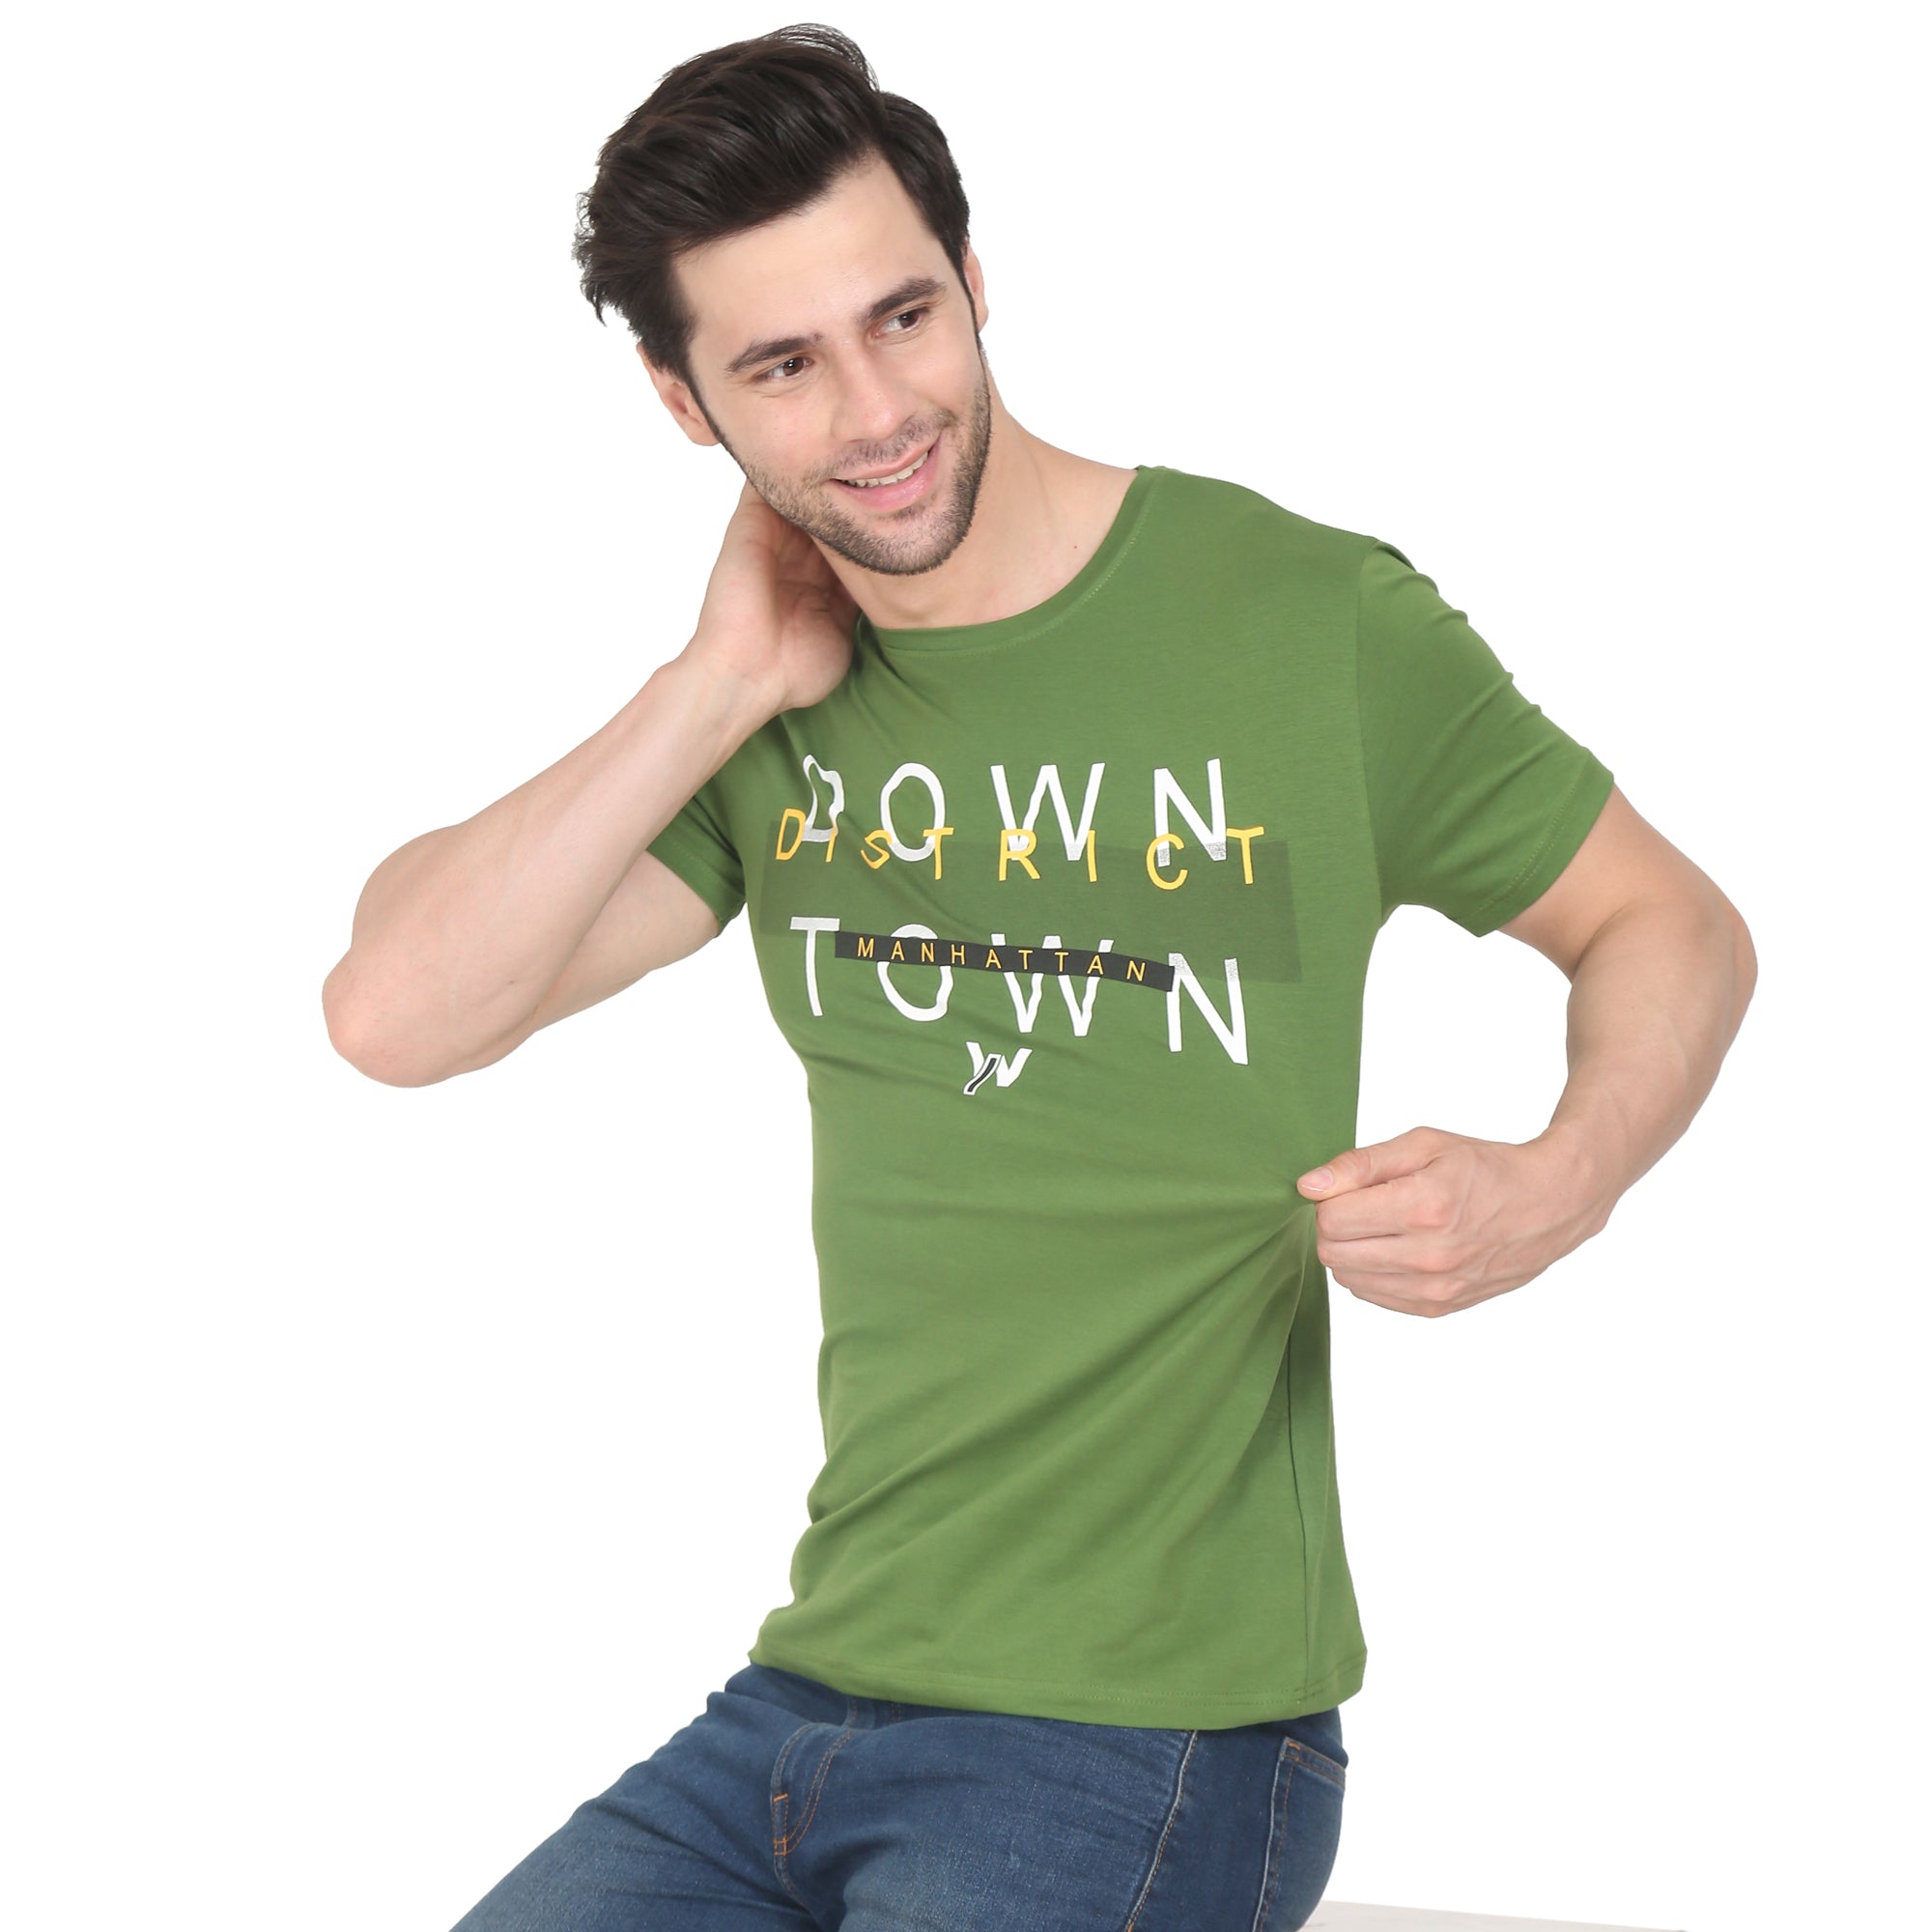 Men Four Way Stretch Cool Cotton Printed T-shirt - Green Colour